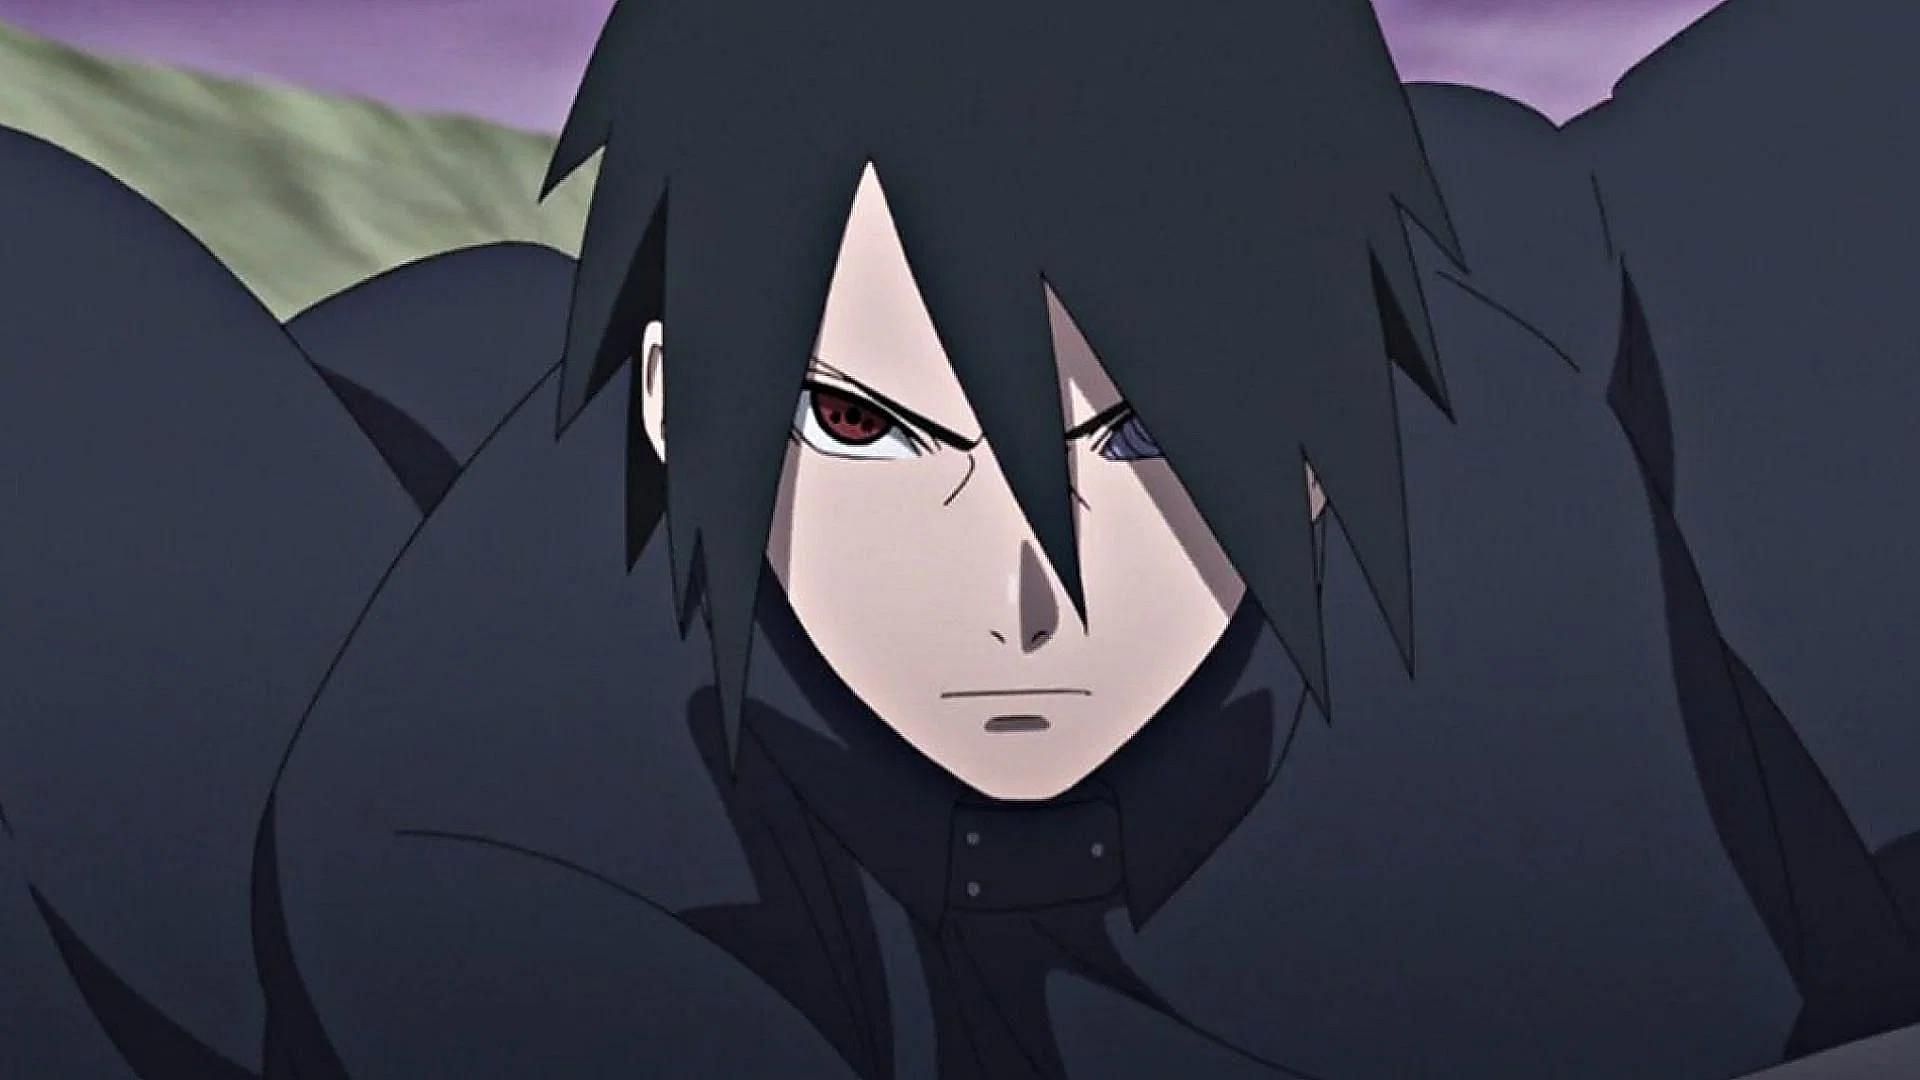 Sasuke as shown in the anime (Image via Studio Pierrot)